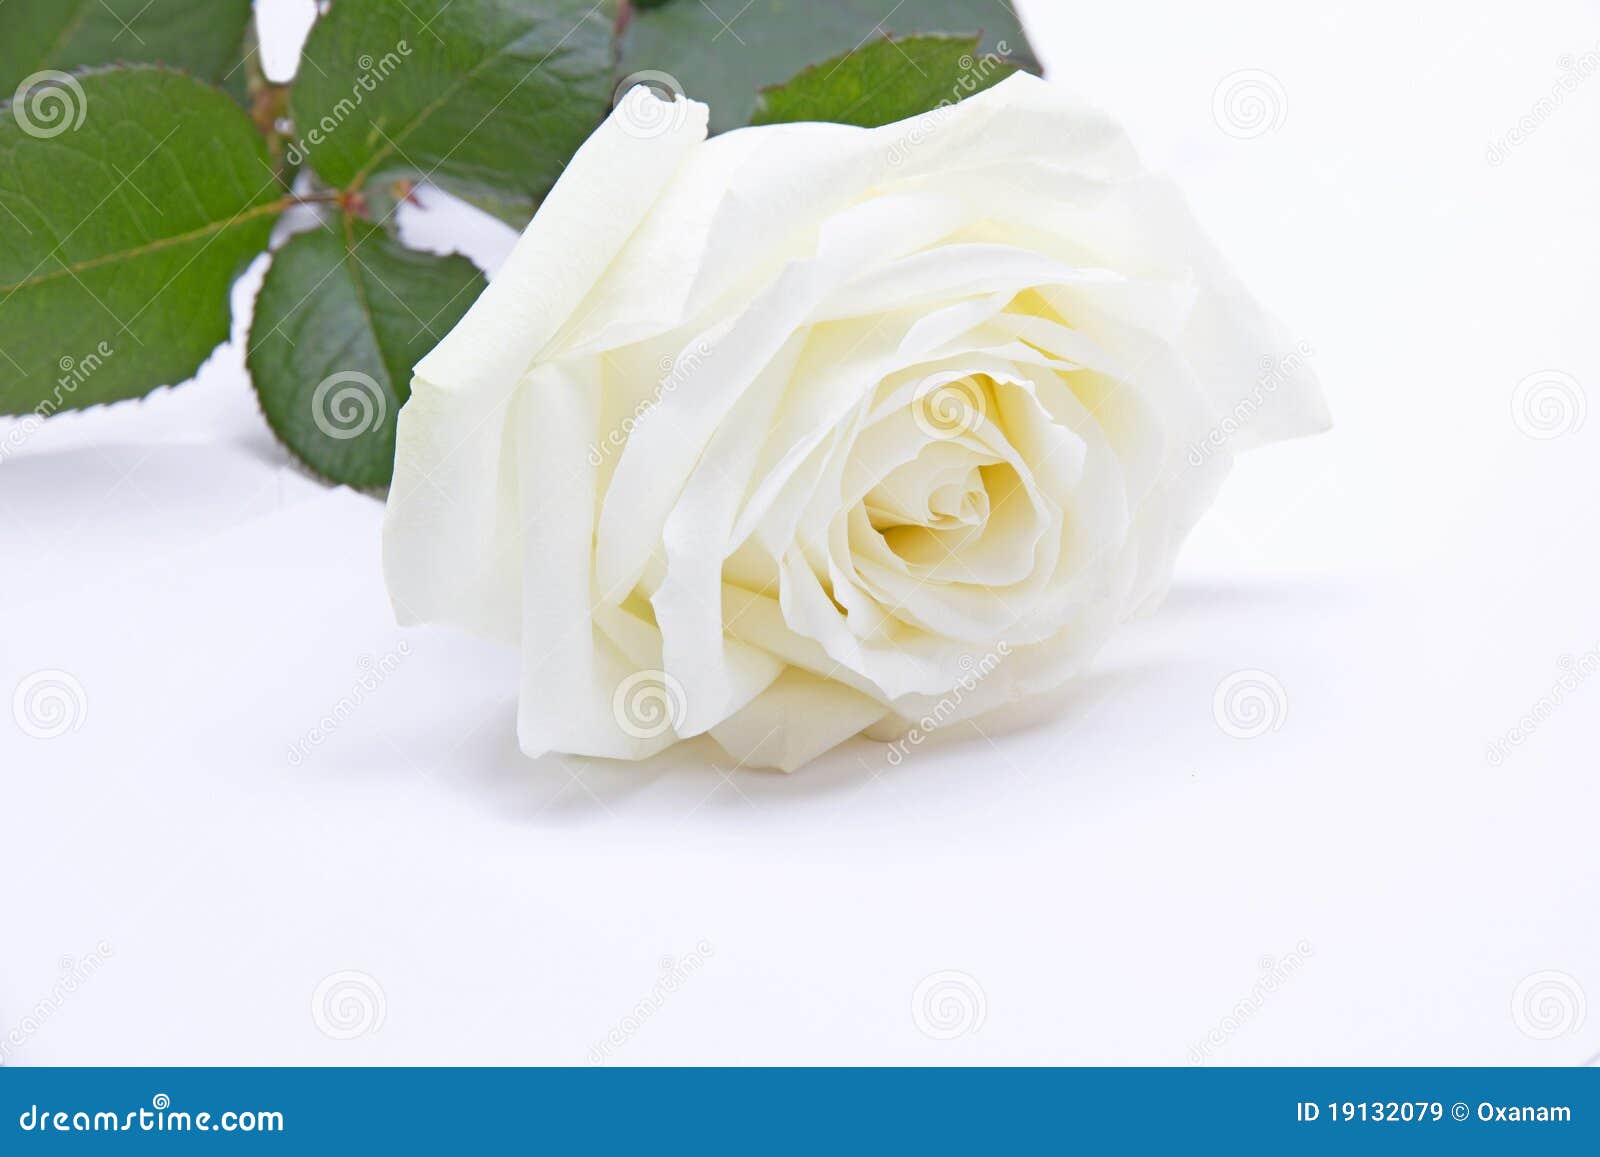 Single white rose stock image. Image of love, bright - 19132079